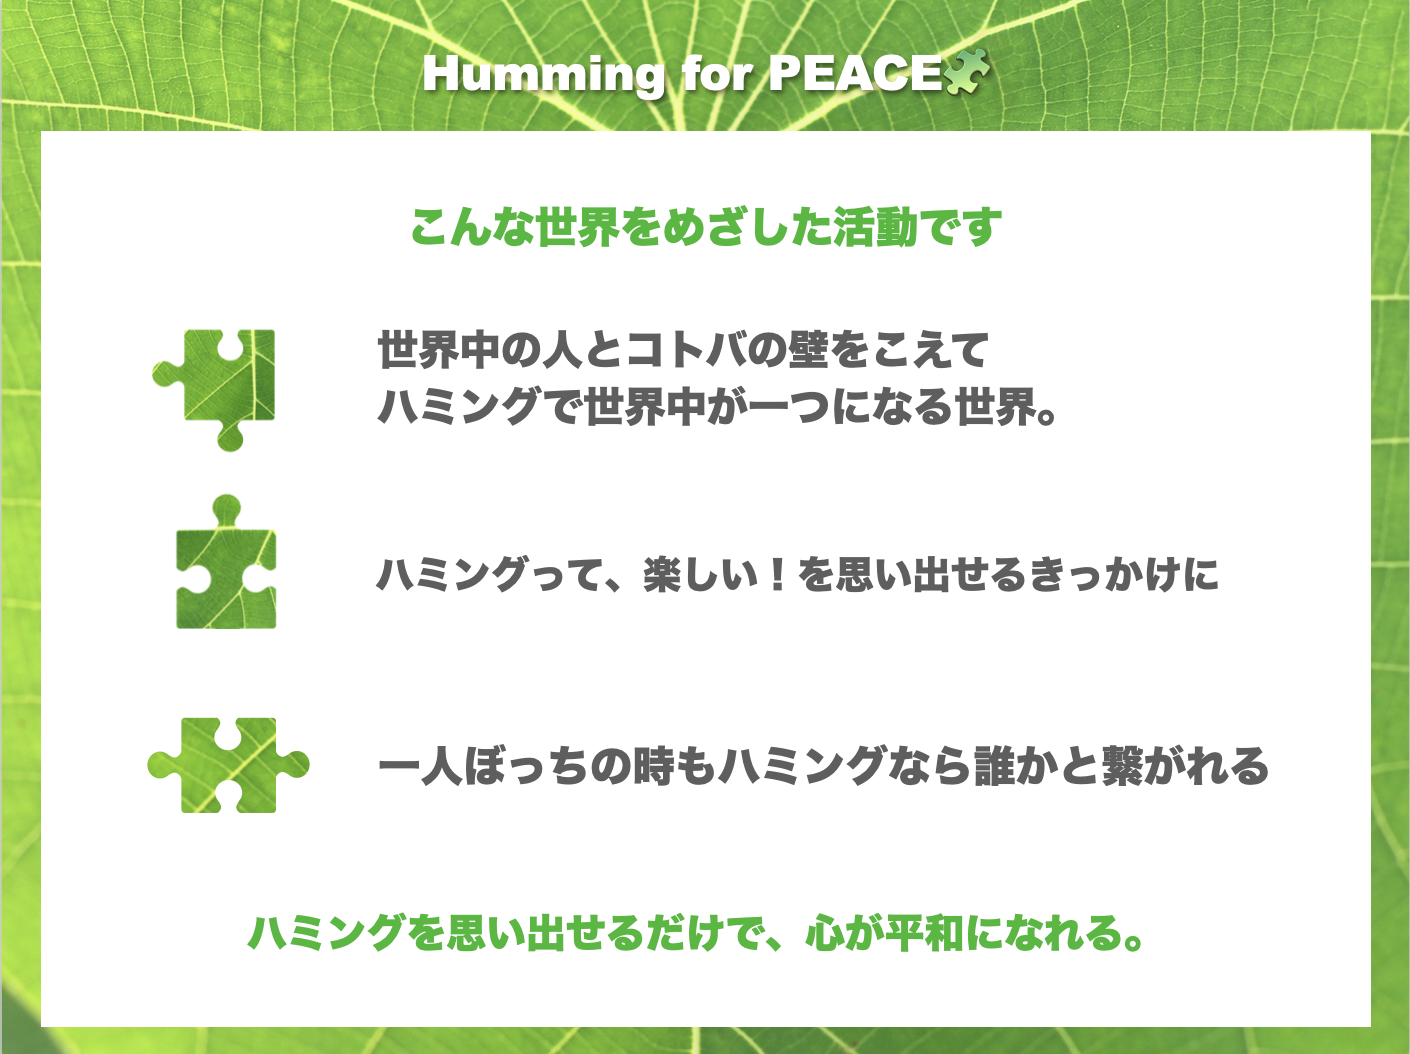 Humming for PEACEとは（ハミングフォーピースとは）日本発祥の平和活動・ハミングで世界平和